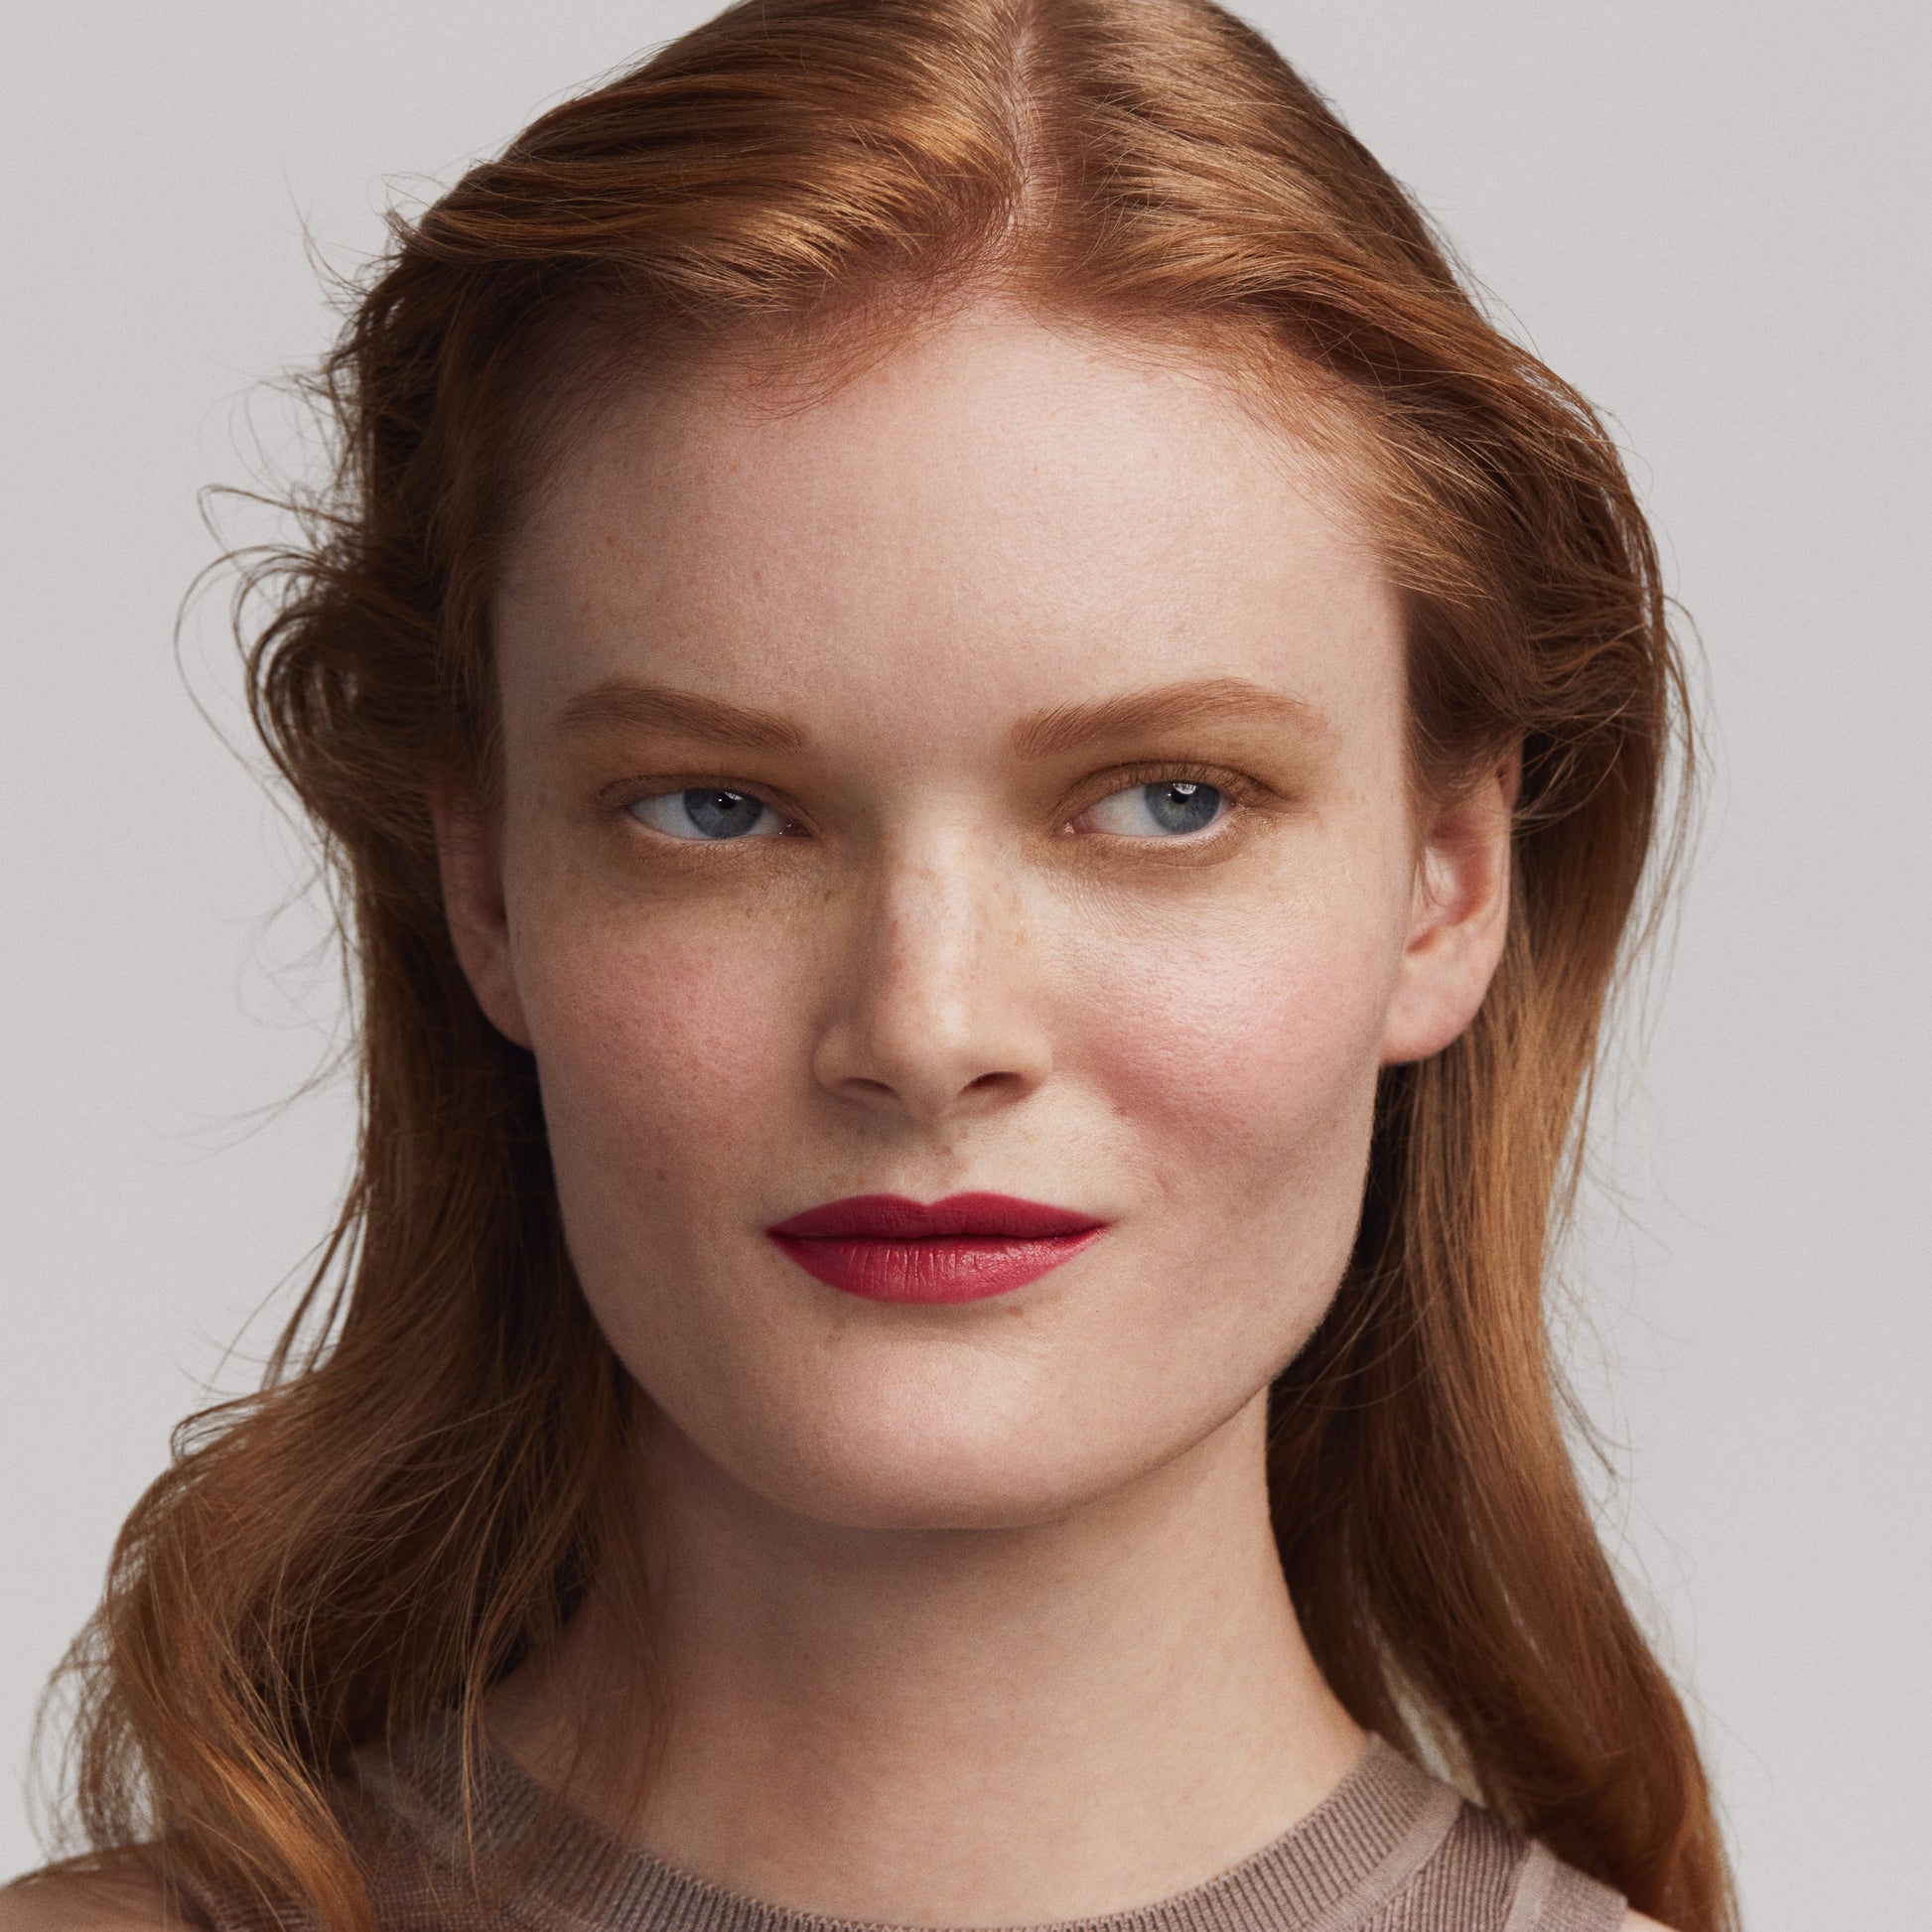 woman with red hair and fair skin wearing kjaer weis brow gel in blonde shade